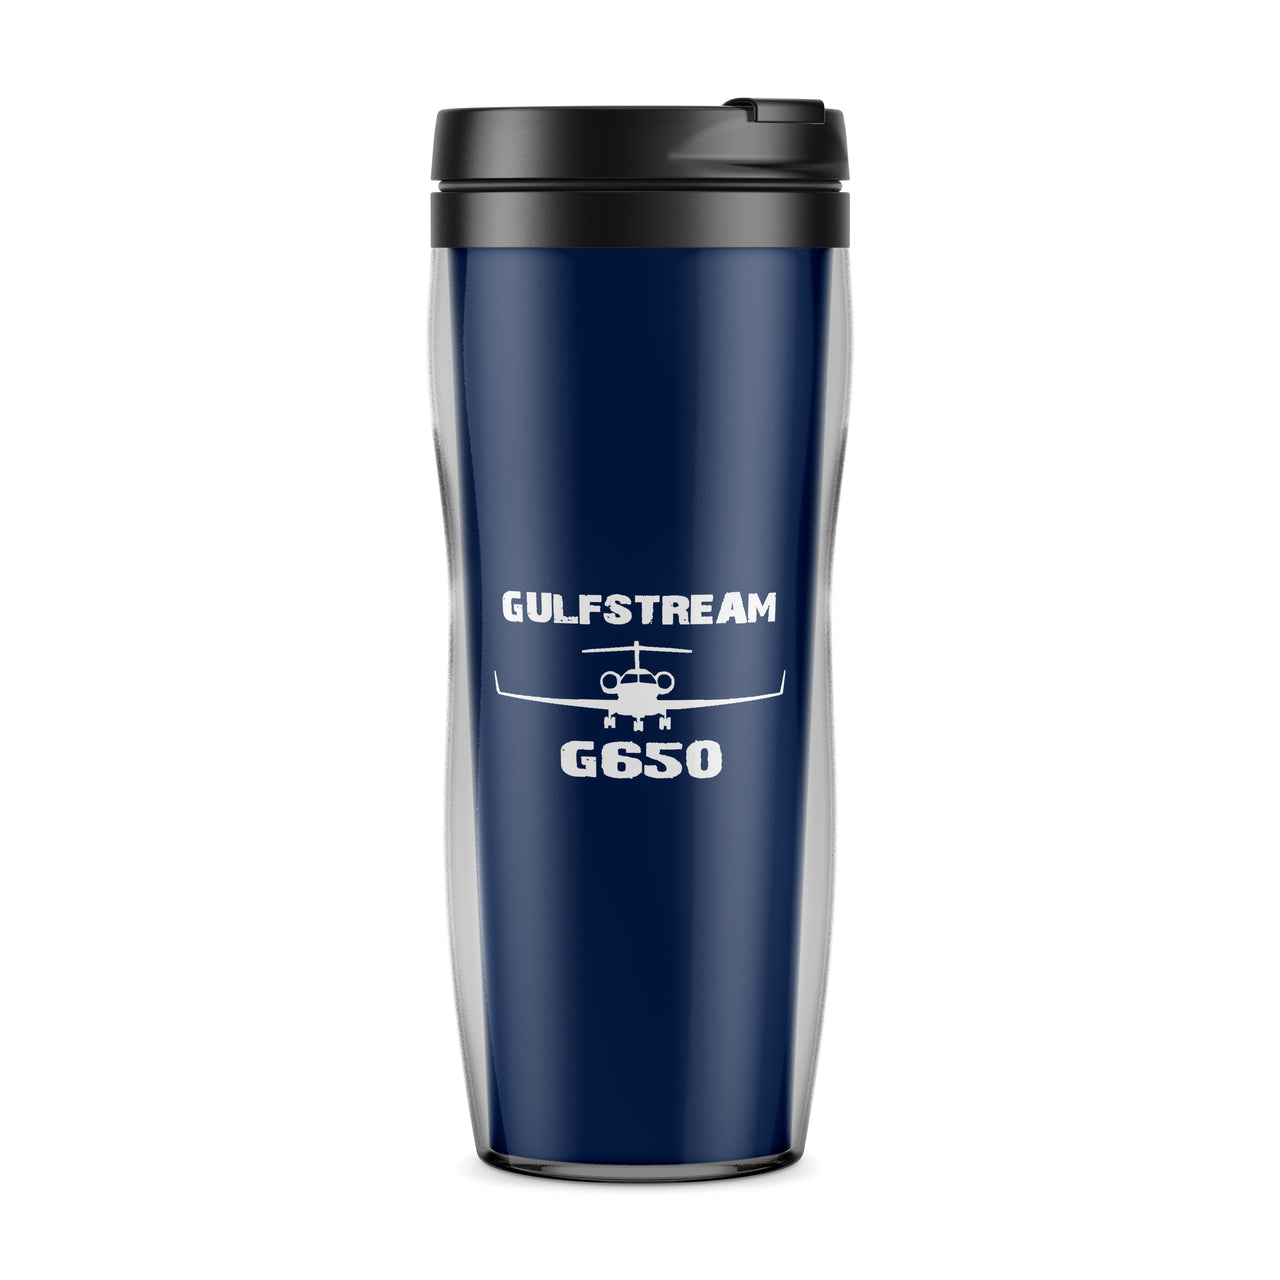 Gulfstream G650 & Plane Designed Travel Mugs